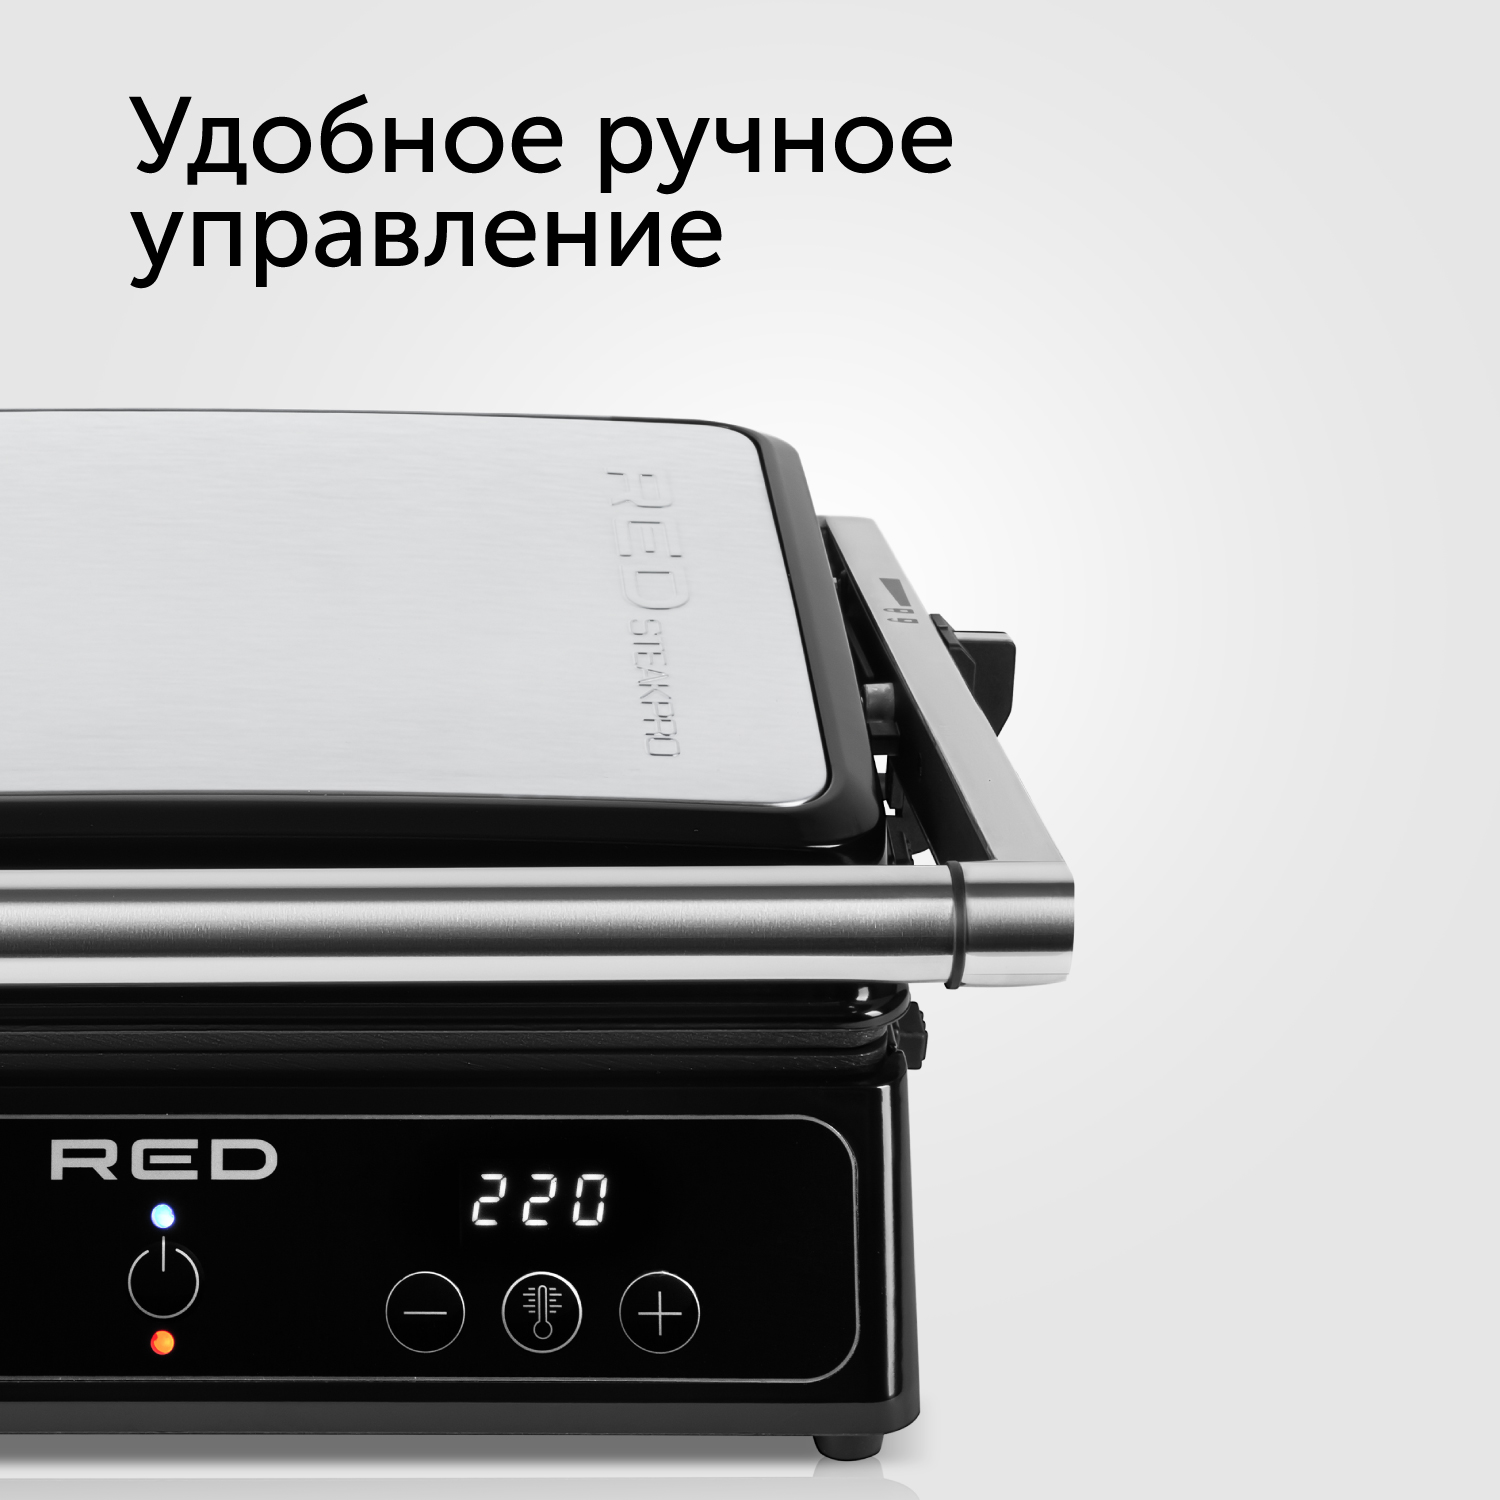 Гриль RED solution SteakPRO RGM-M809